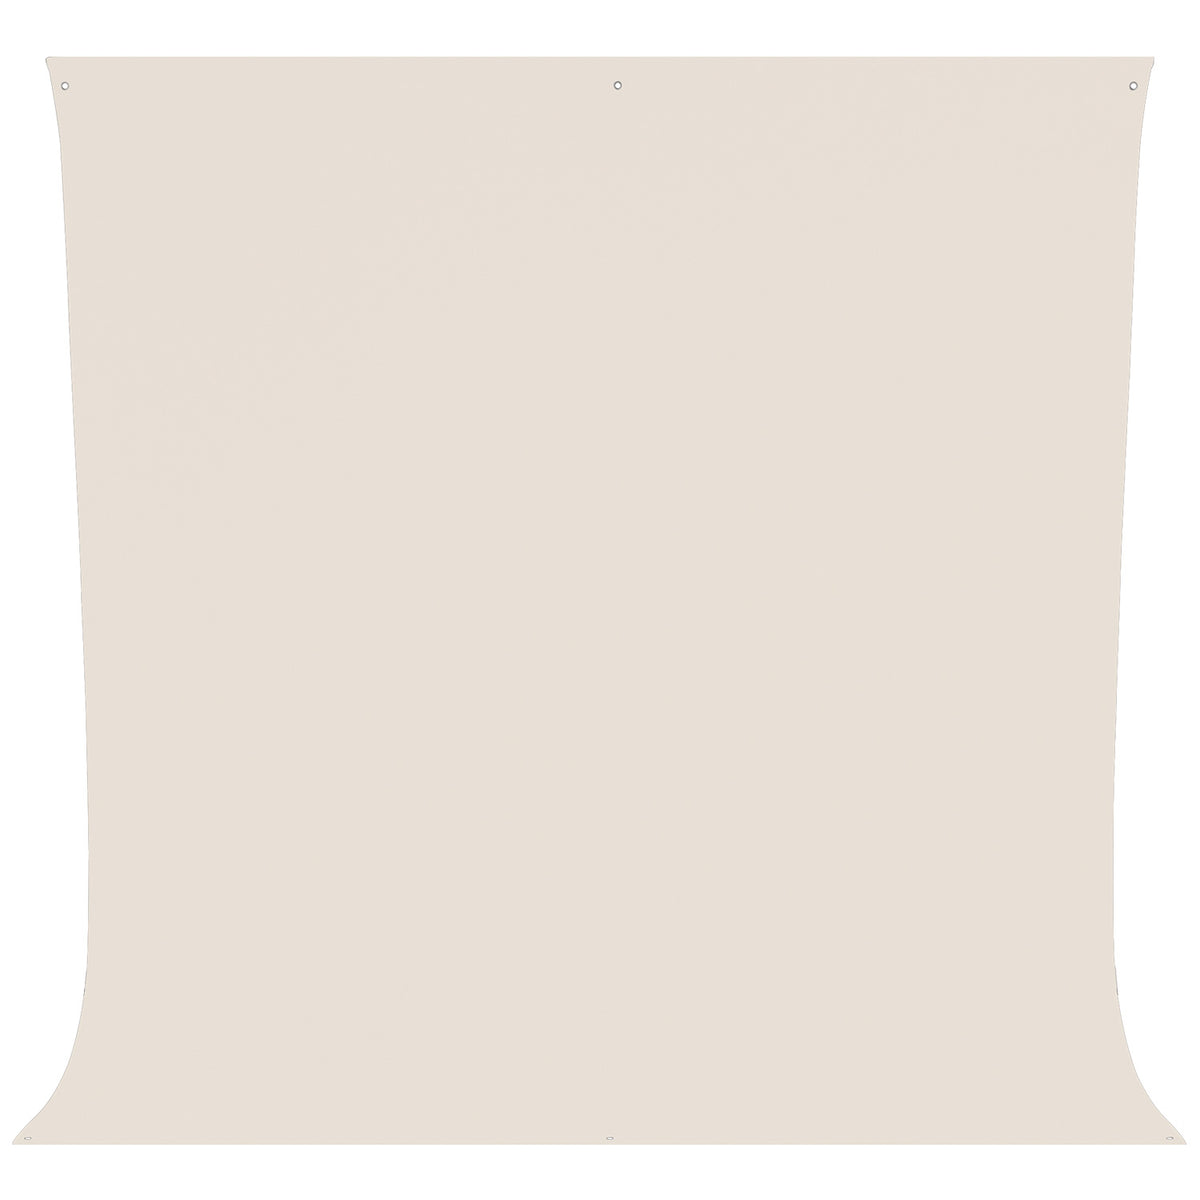 Wrinkle-Resistant Backdrop - Buttermilk White (9' x 10')